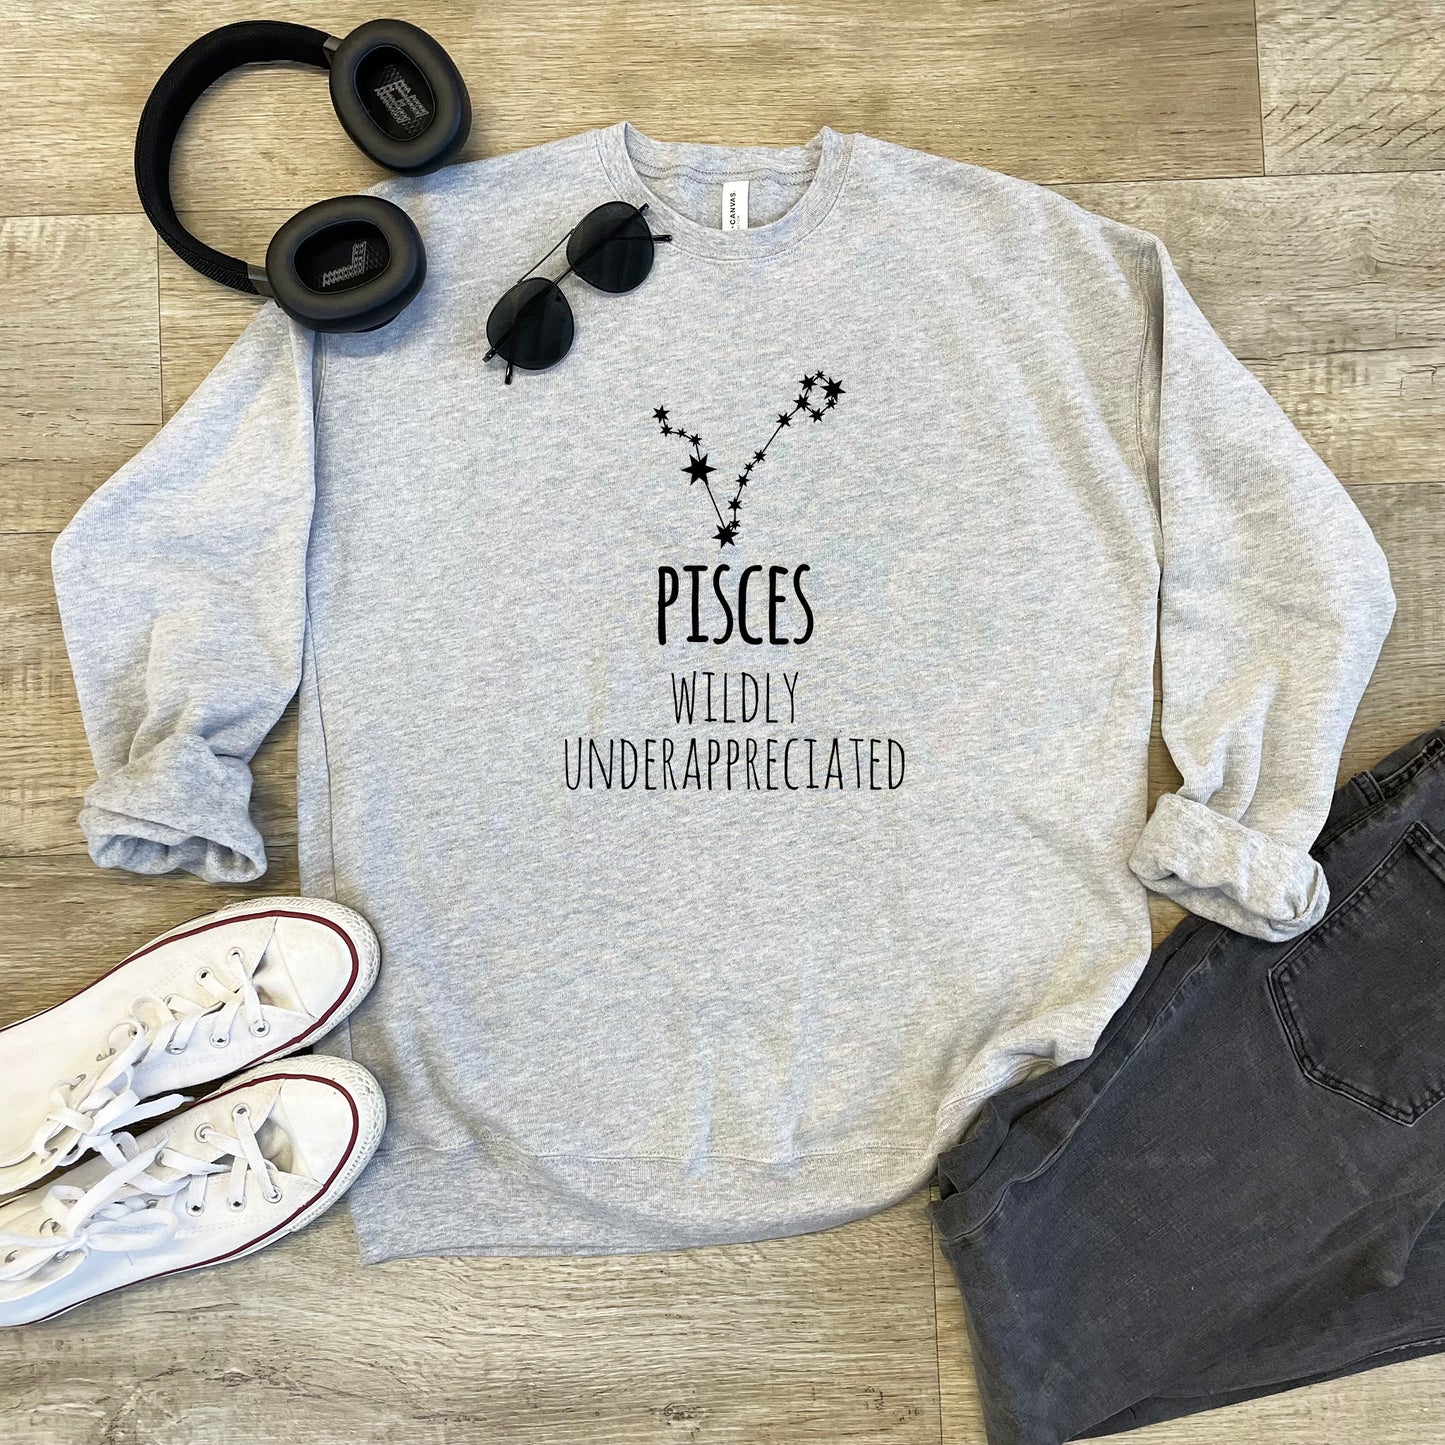 Pisces (Wildly Underappreciated) - Unisex Sweatshirt - Heather Gray or Dusty Blue